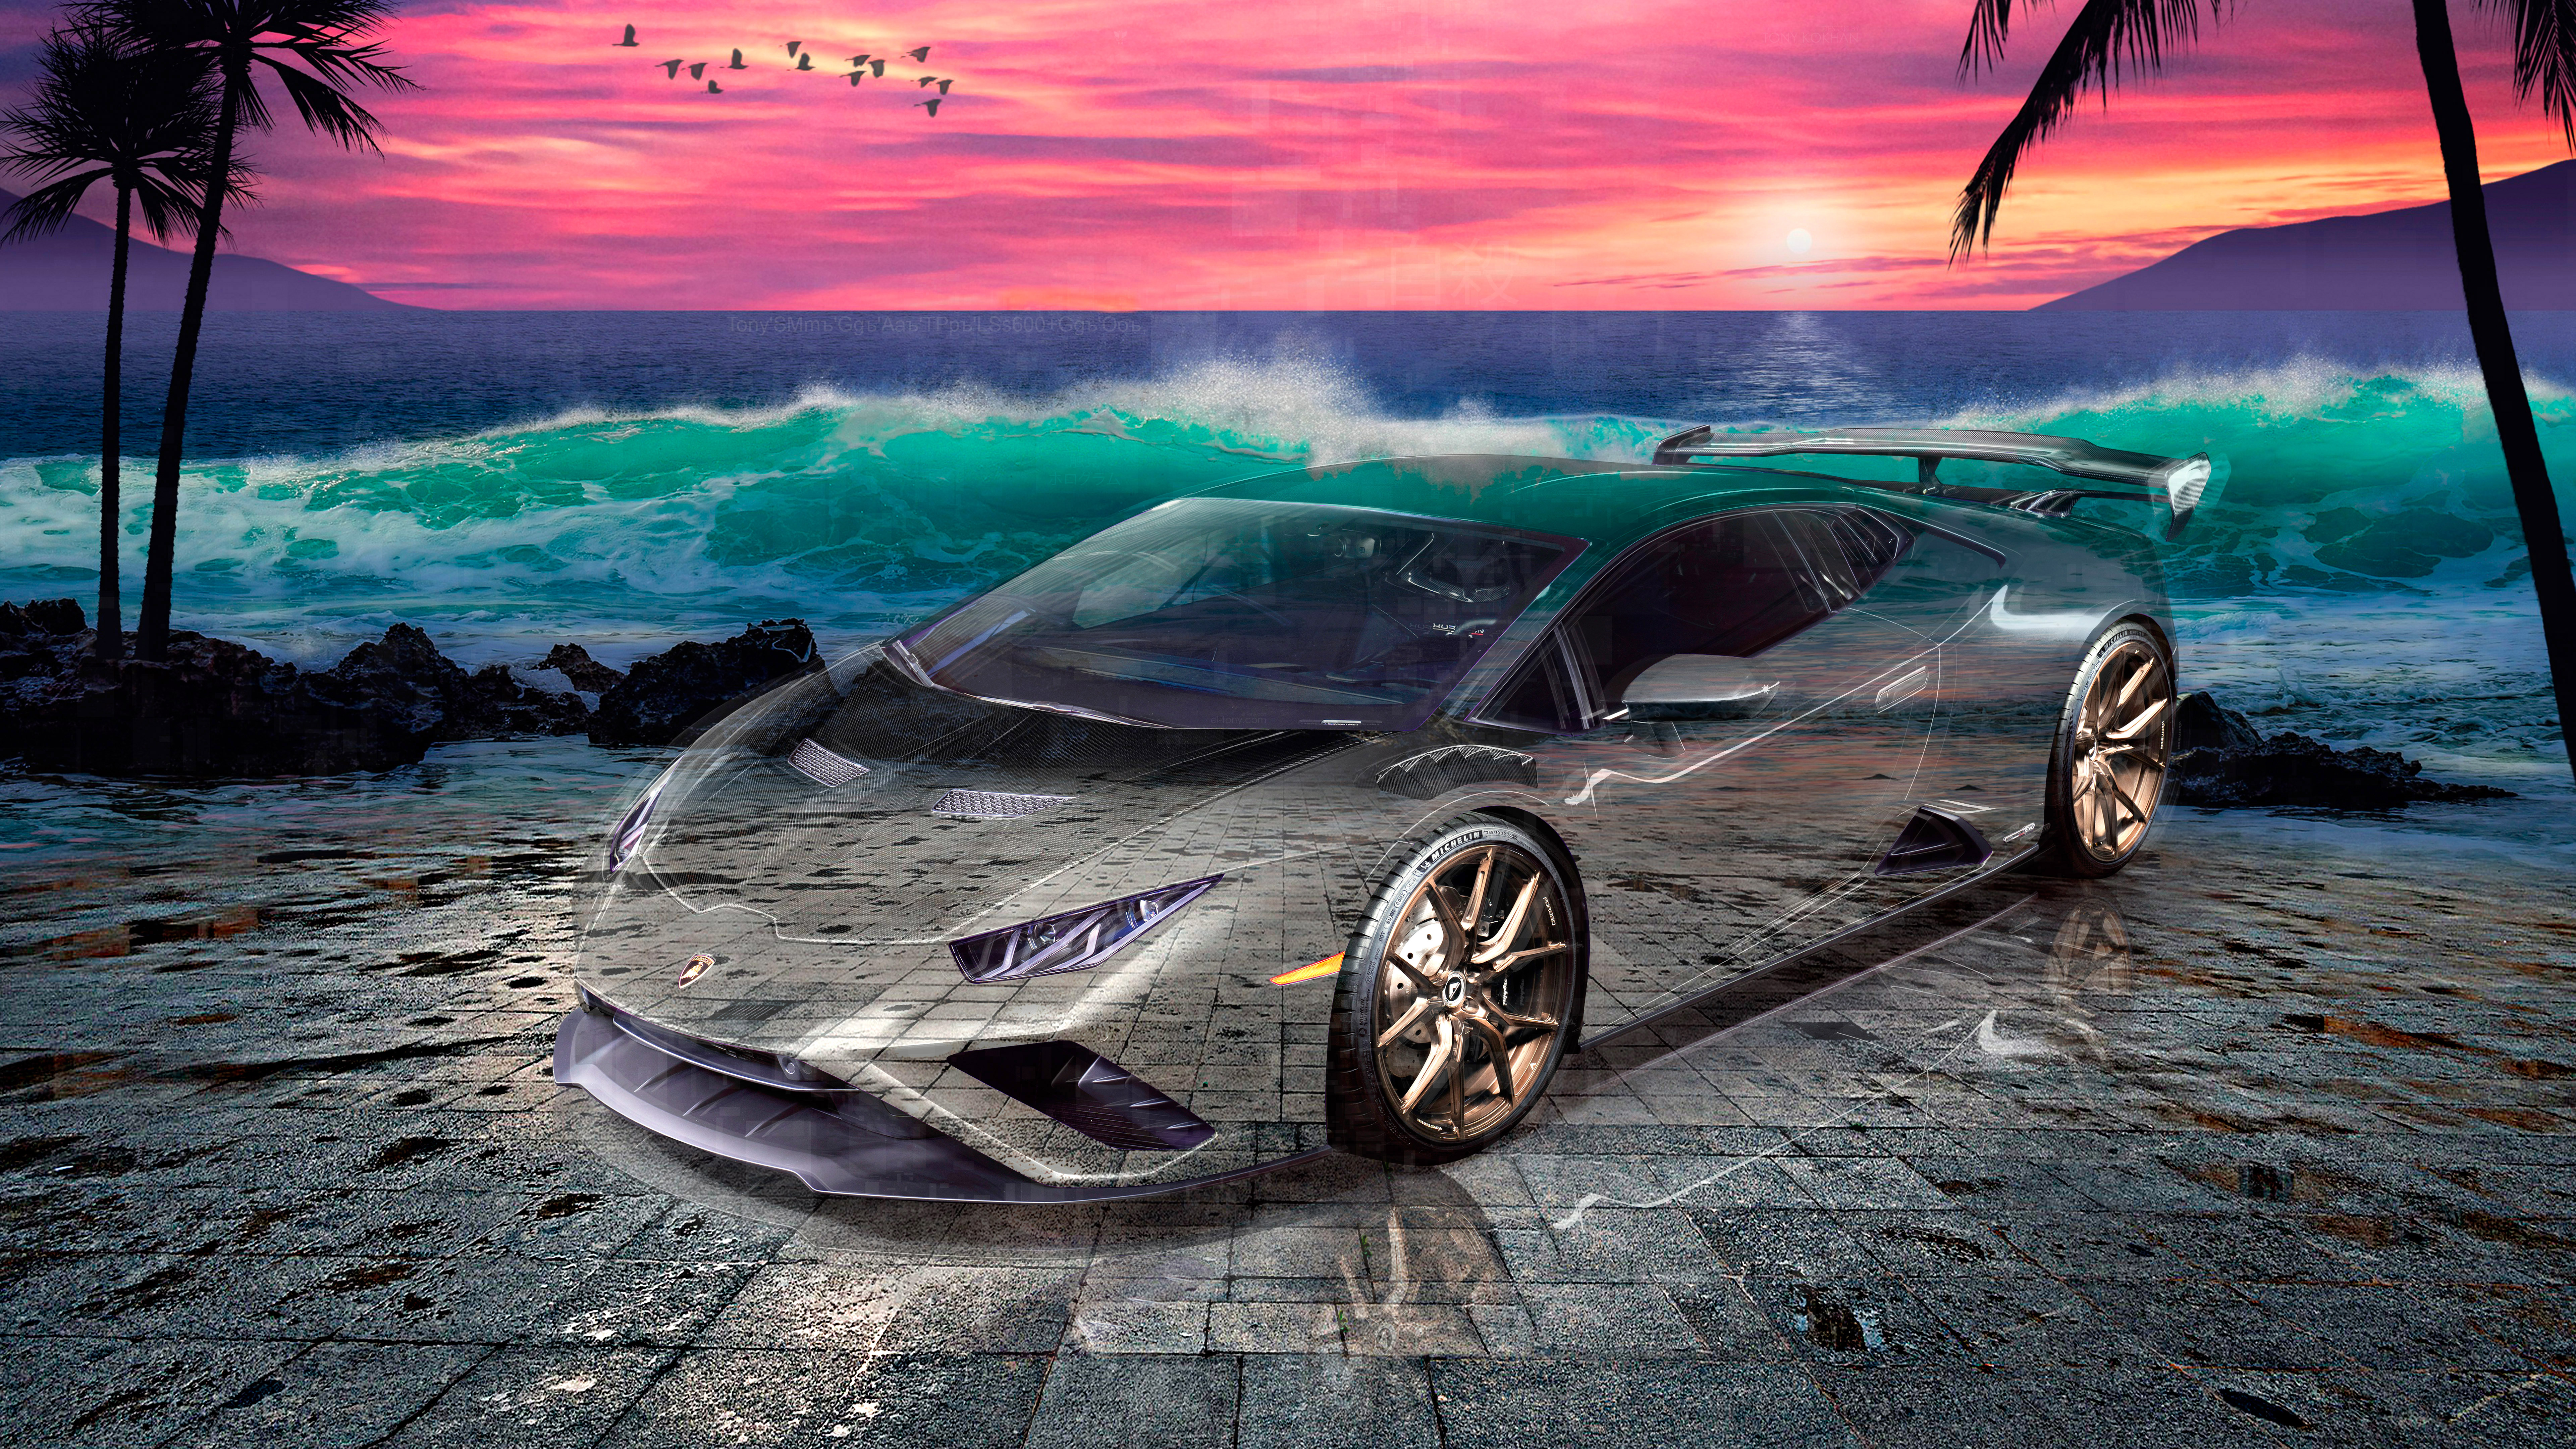 Lamborghini-Huracan-Evo-Super-Crystal-Suicide-Soul-Sea-Waves-Palm-Tree-Tactile-Hologram-Art-Car